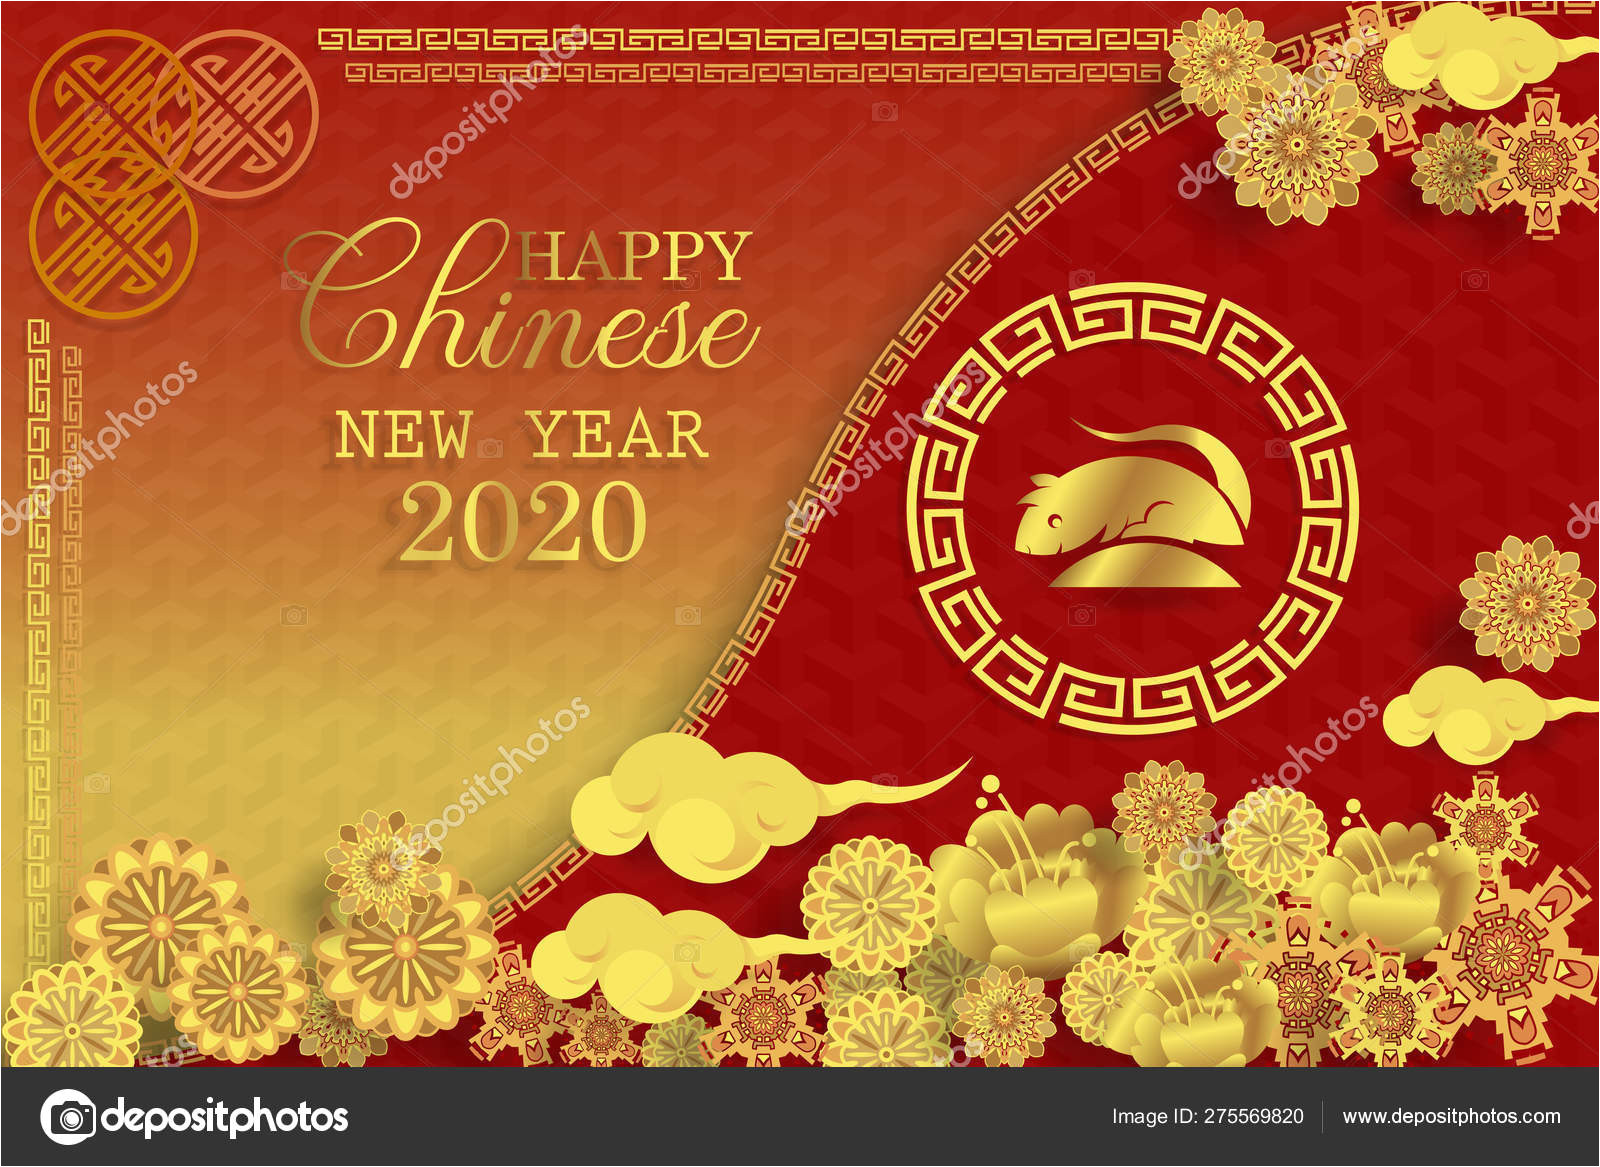 depositphotos 275569820 stock illustration chinese new year 2020 greeting jpg